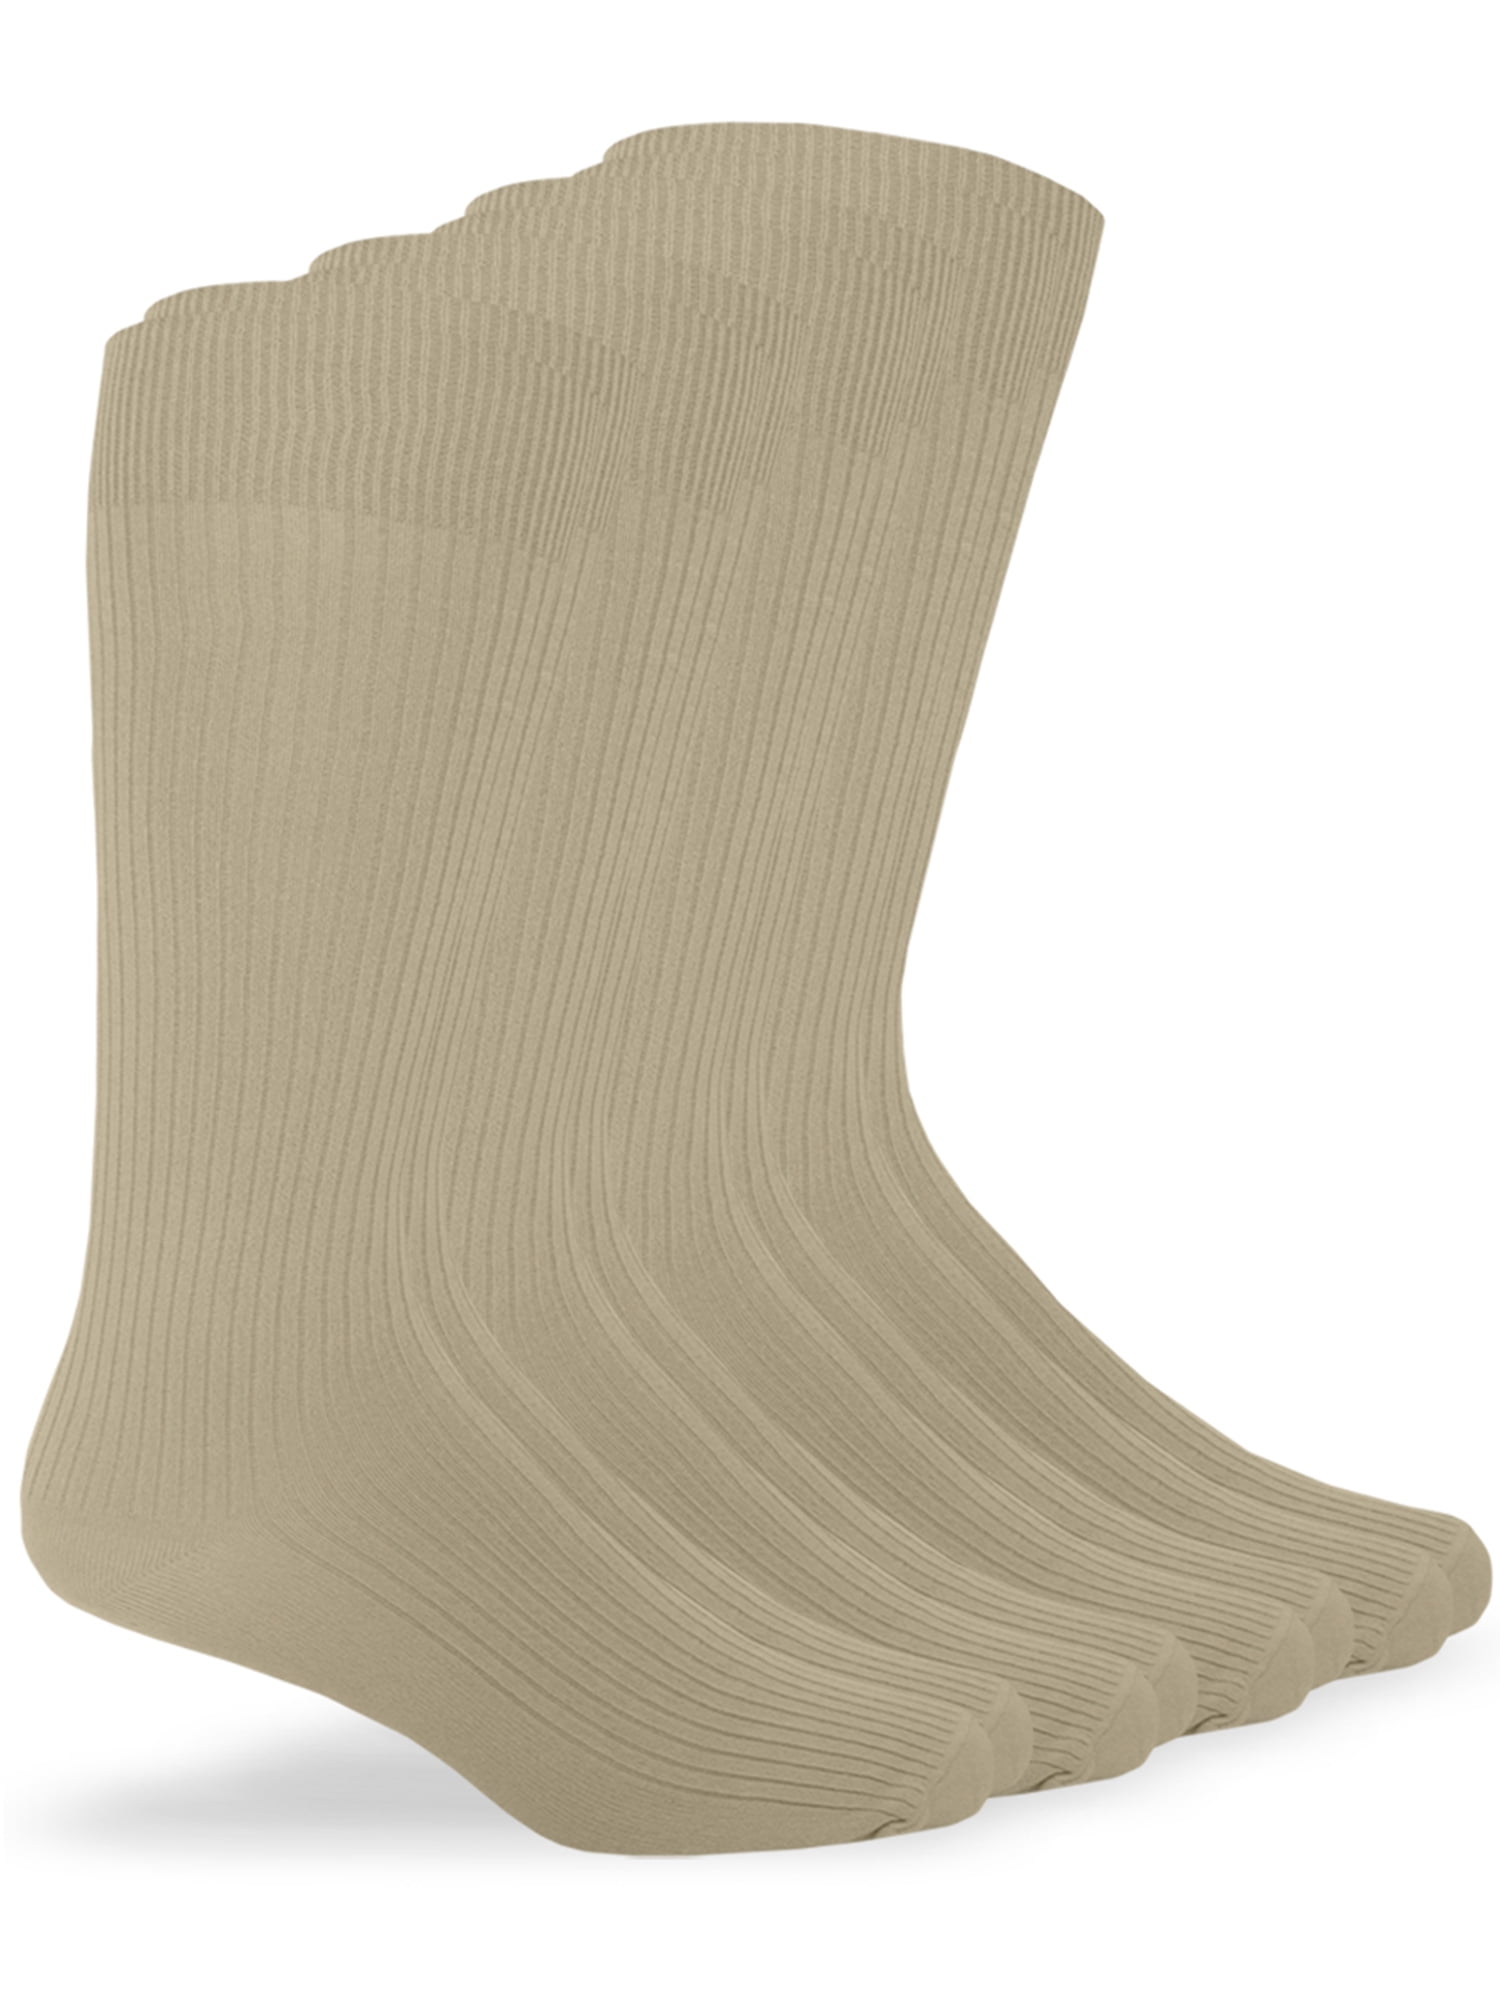 Jefferies Socks Microfiber Nylon Rib Mid Calf Dress Socks (Unisex), 4 Pack